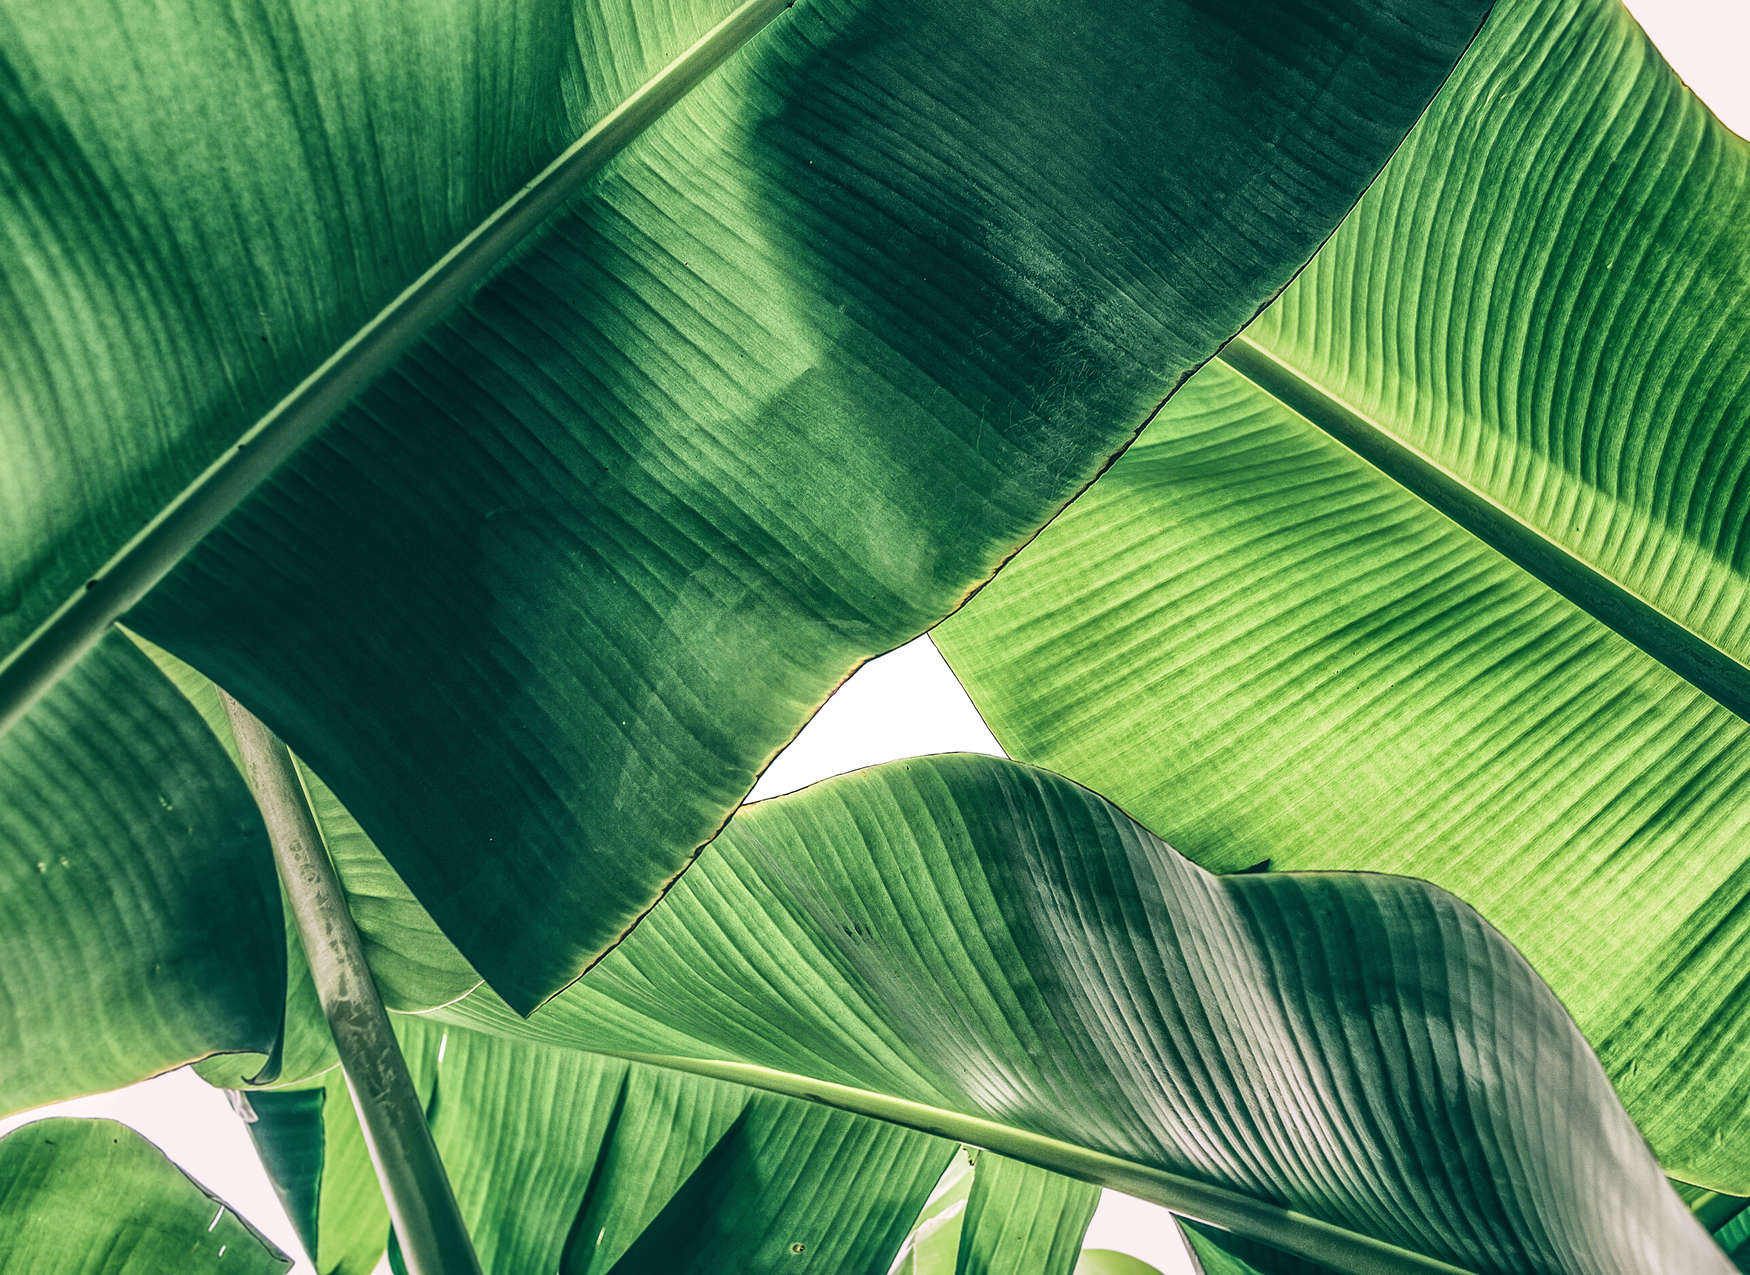             Tropical leaves detail image motif - Green
        